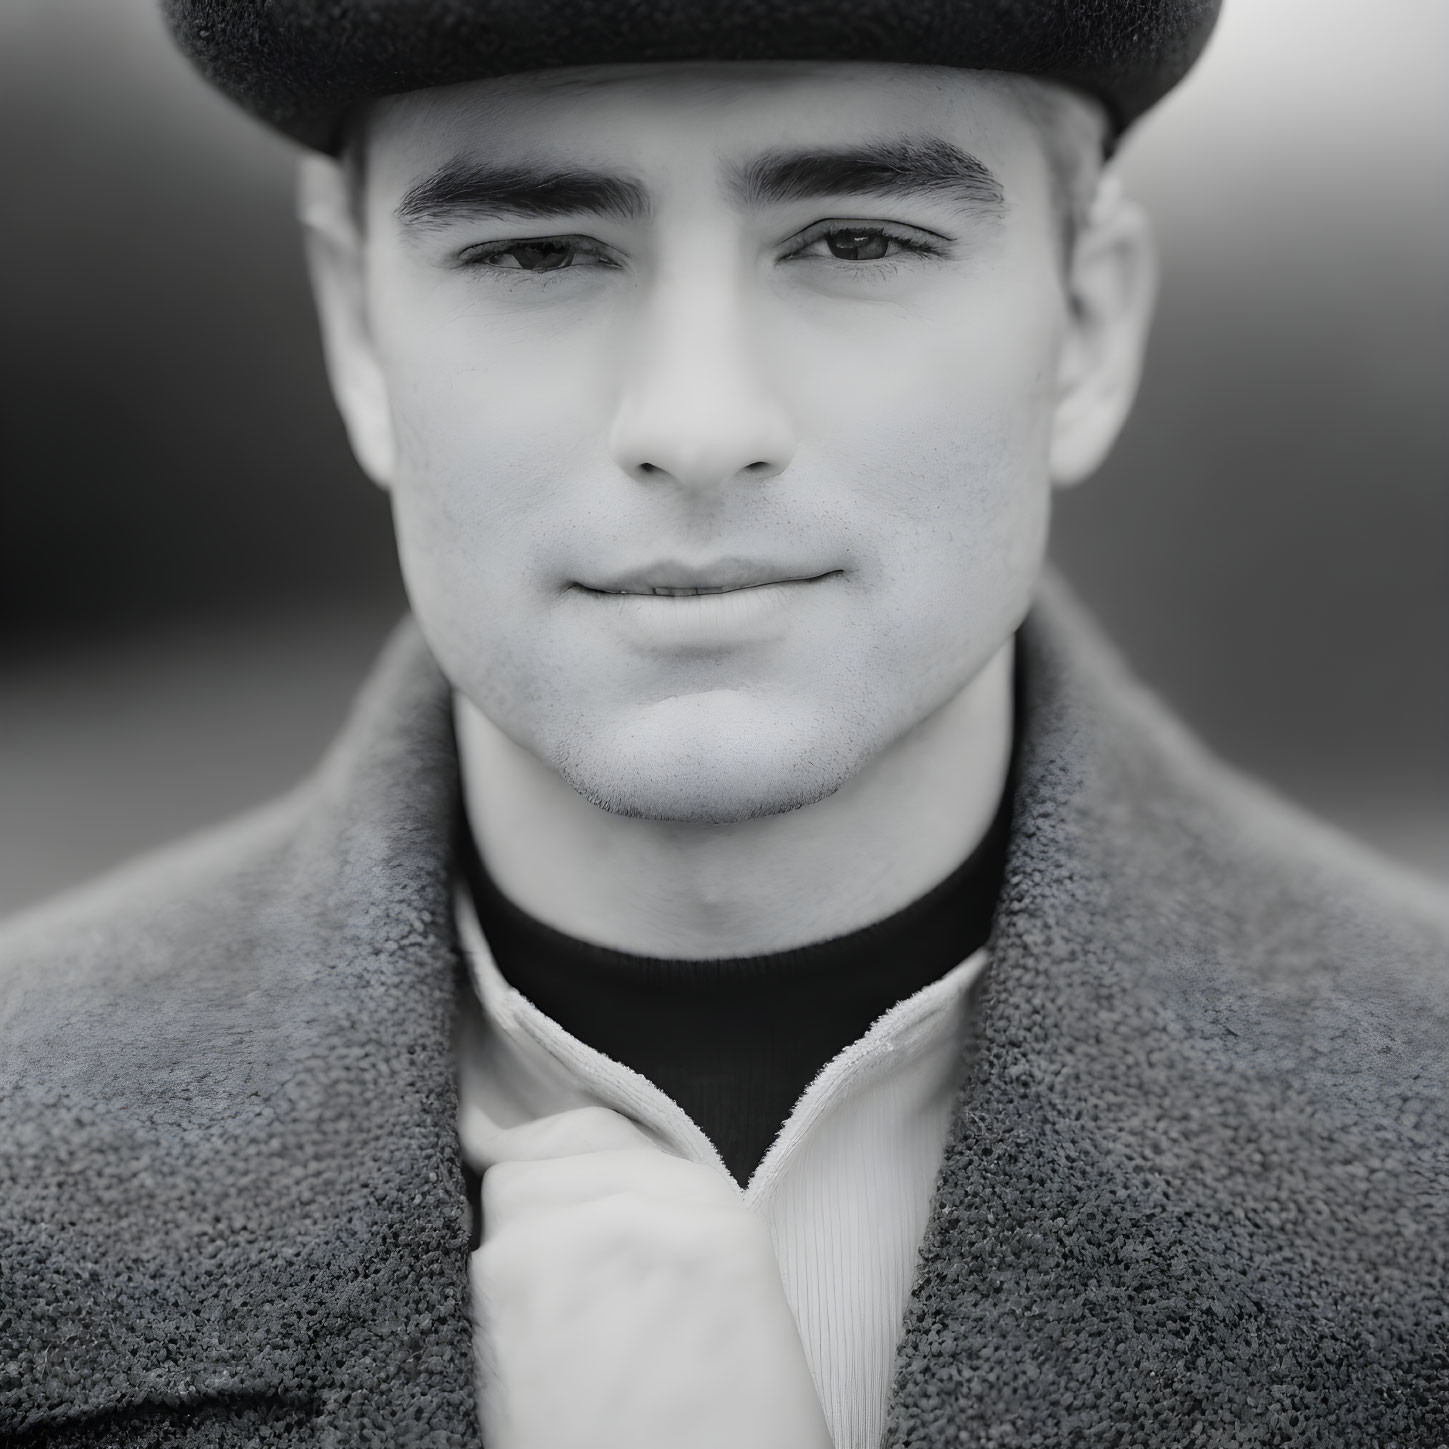 Monochrome portrait of man in beret, coat, and black shirt